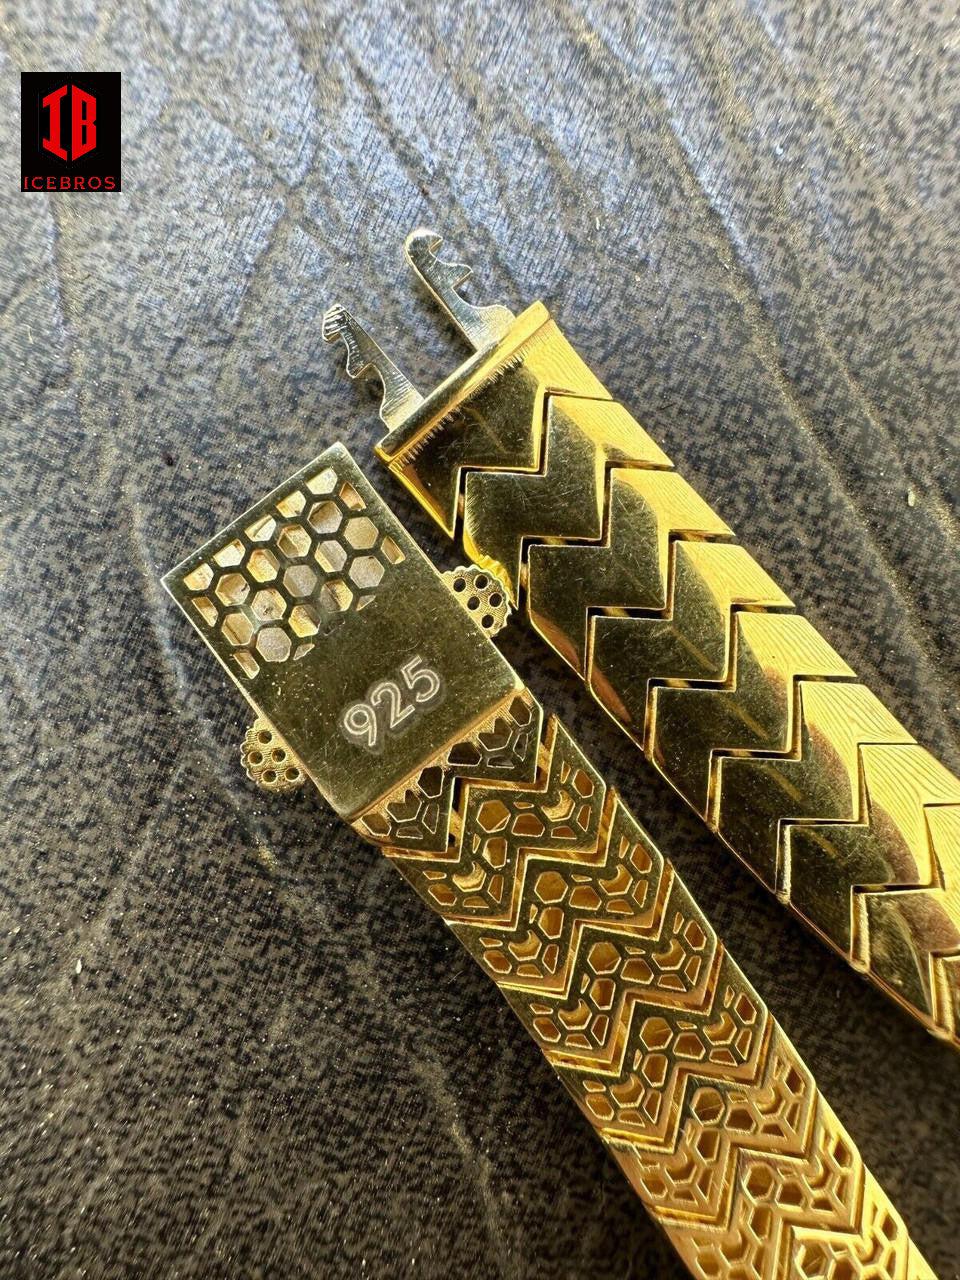 Monaco Snake Skin Bracelet Real 14k Gold Plated 925 Silver 10mm Men Ladies